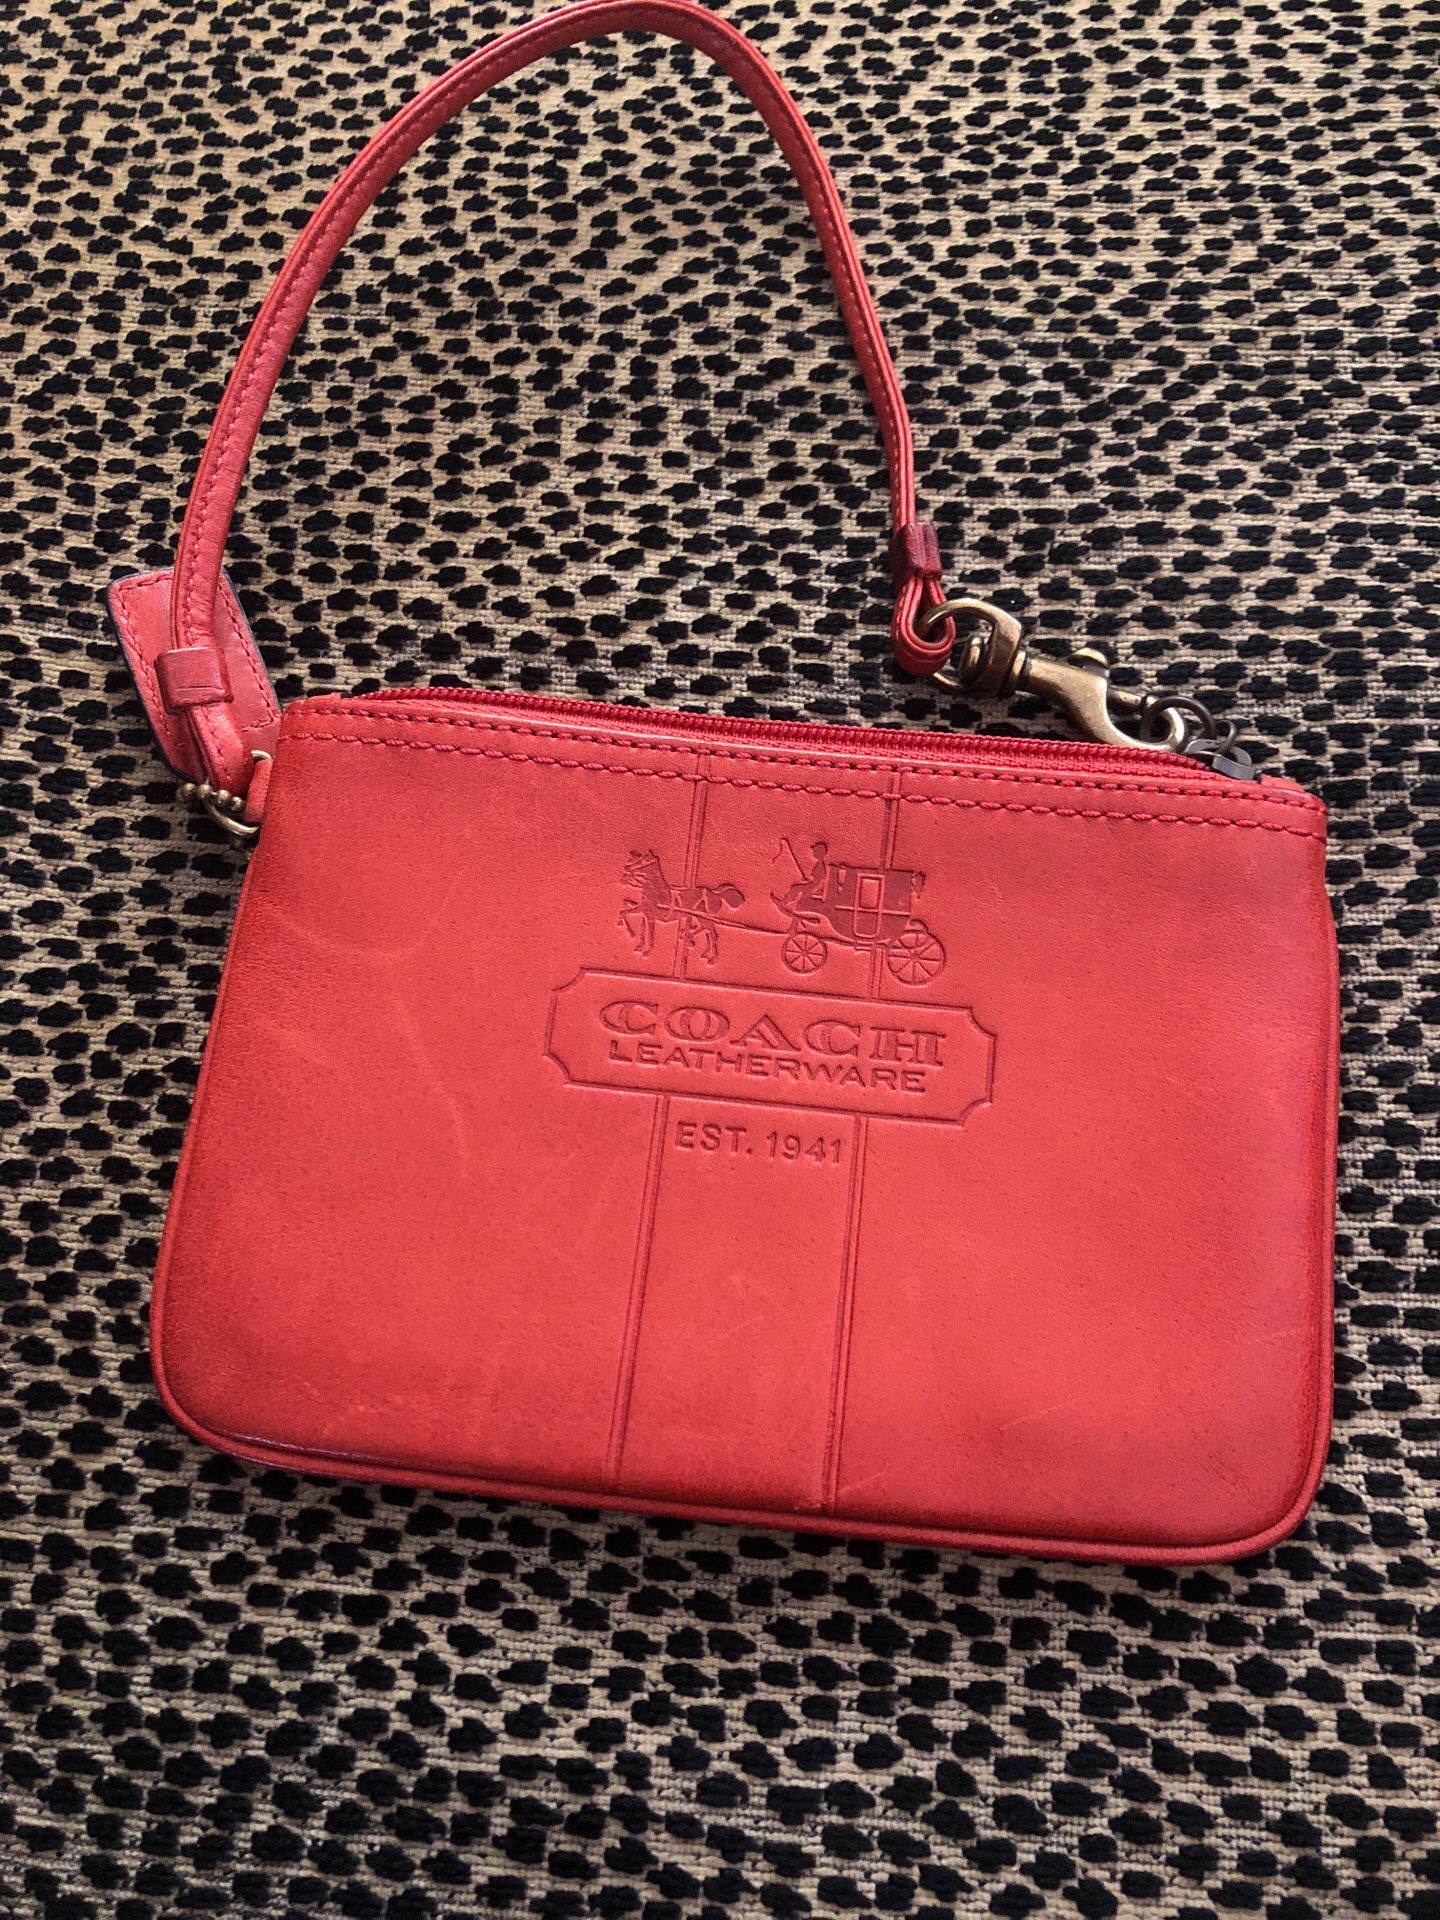 Coach leather small purse